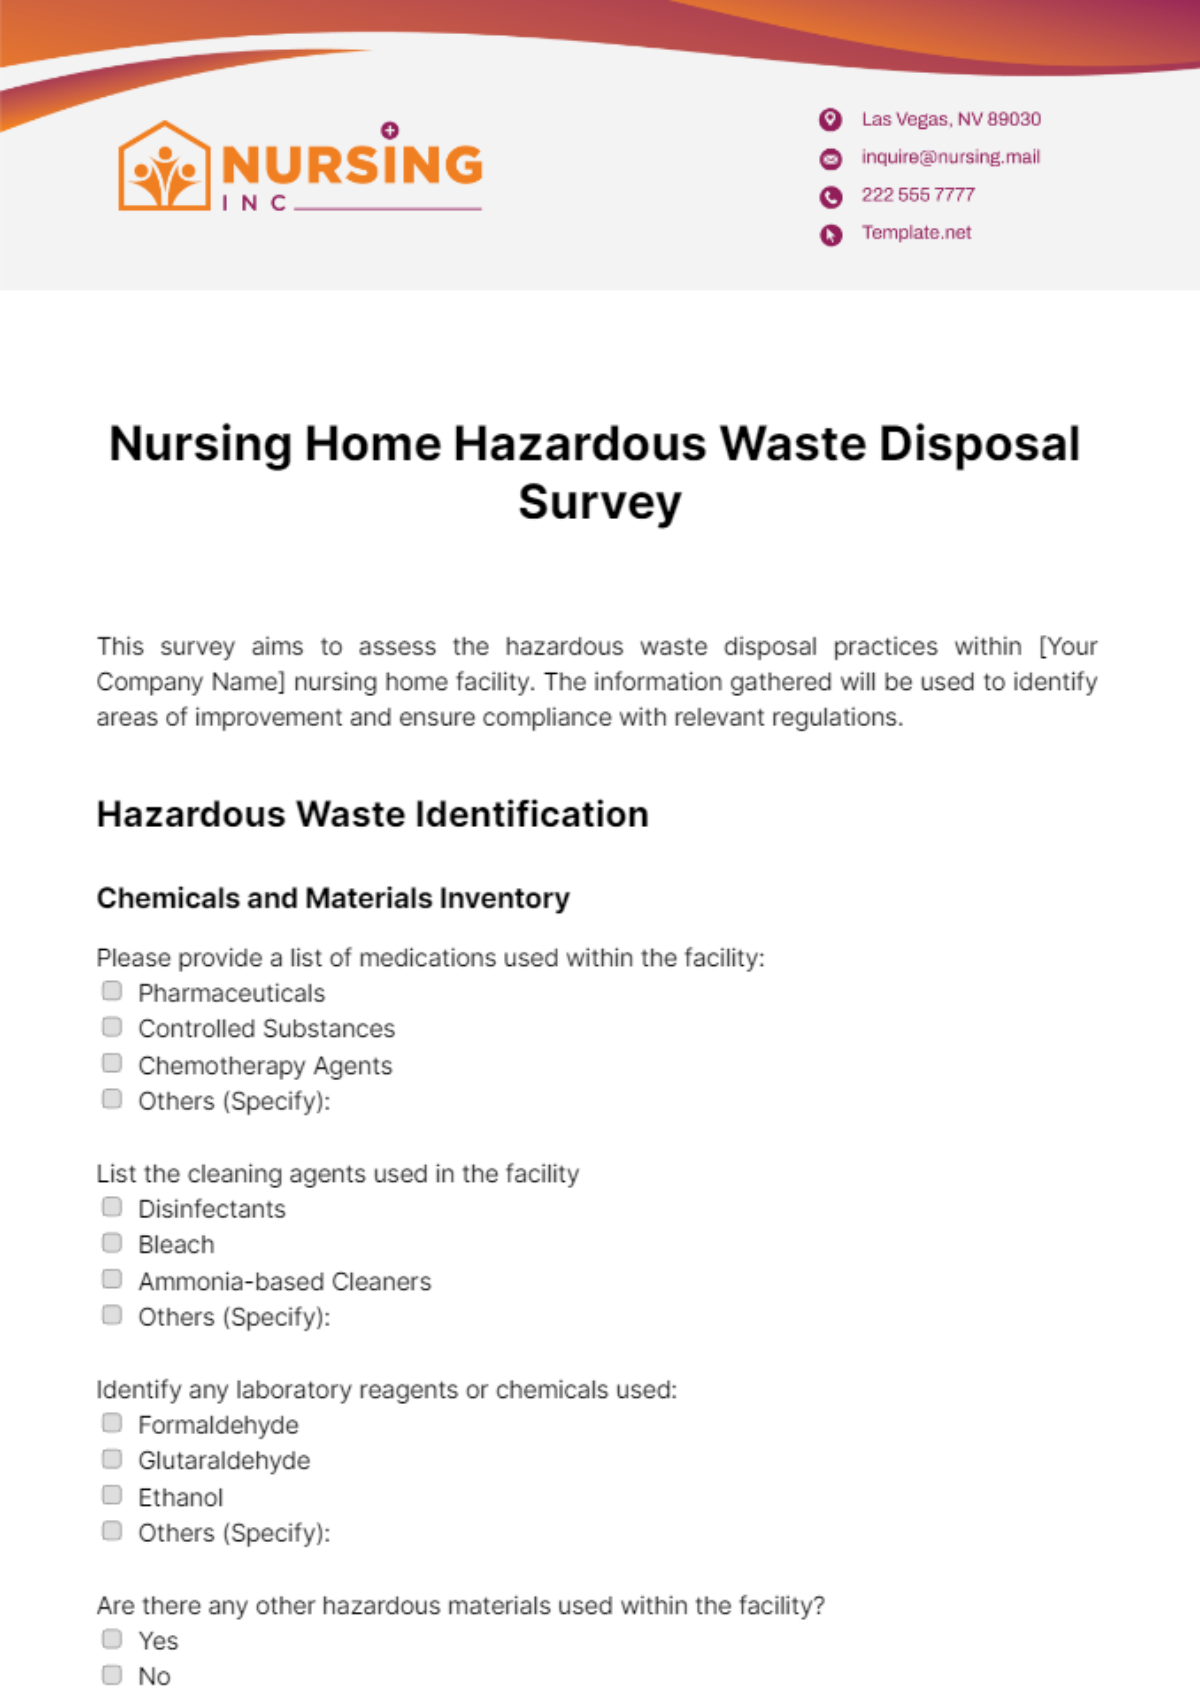 Nursing Home Hazardous Waste Disposal Survey Template